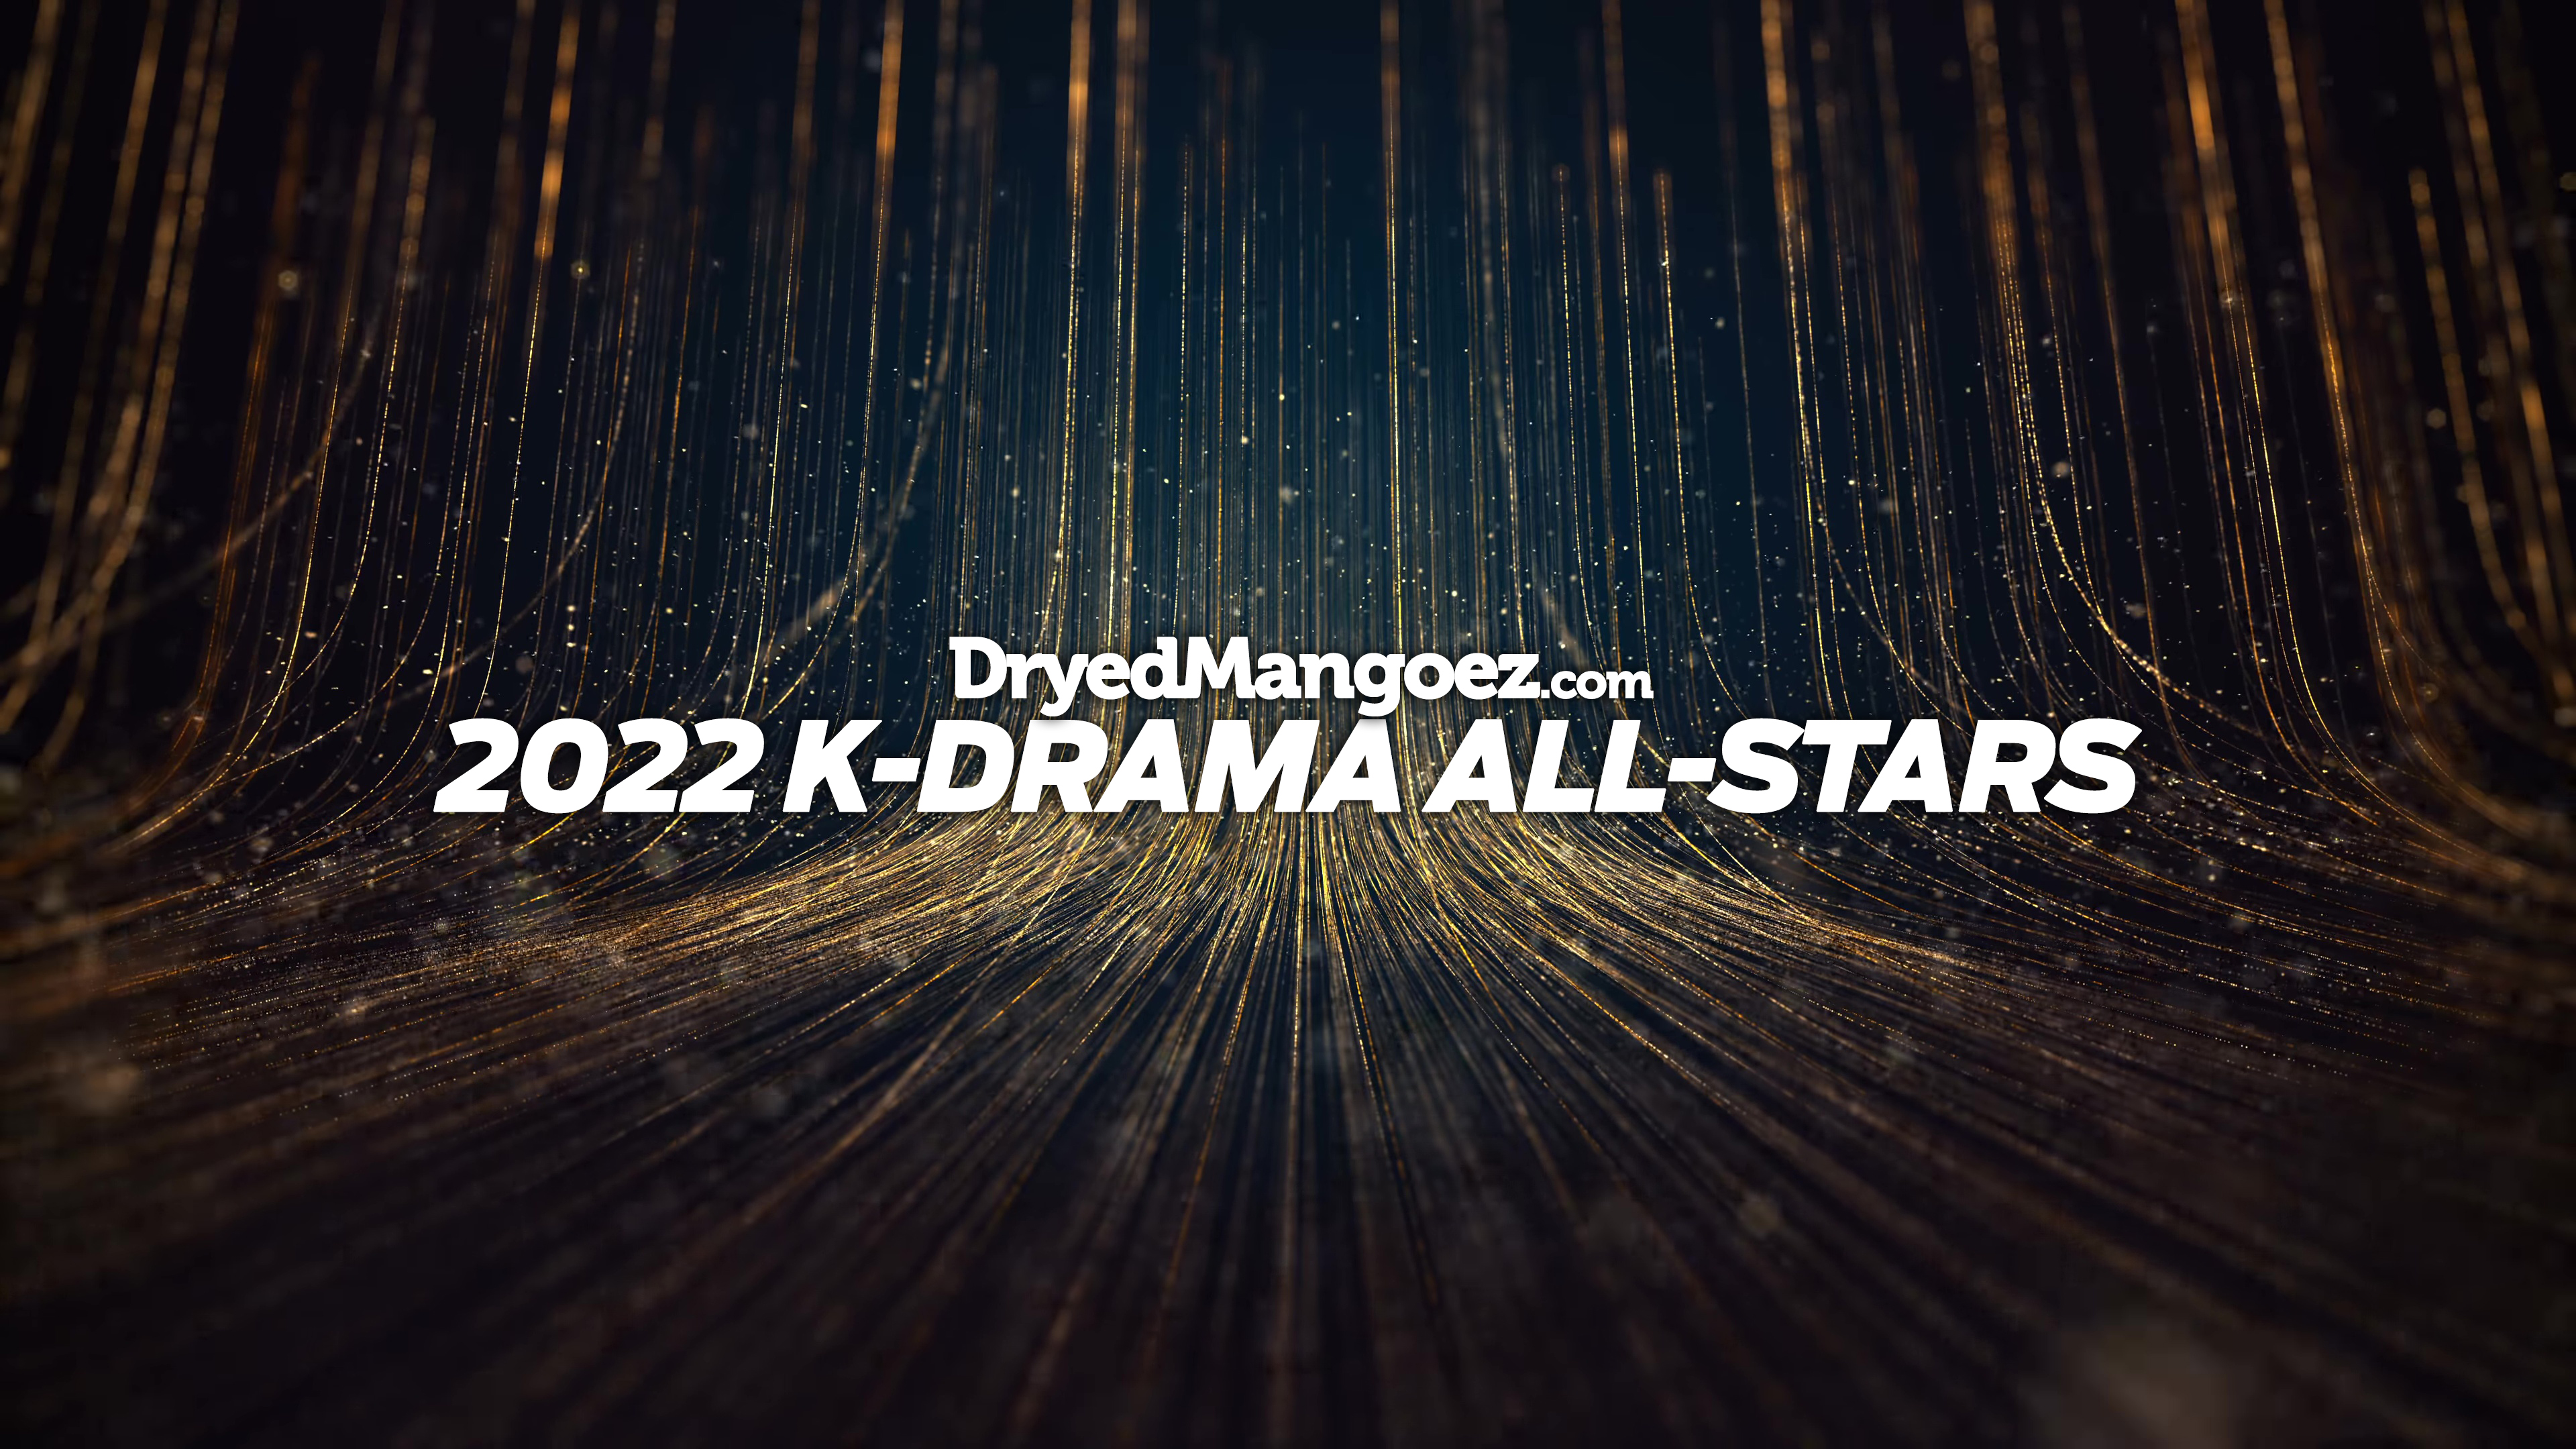 My 2022 K-Drama All-Stars